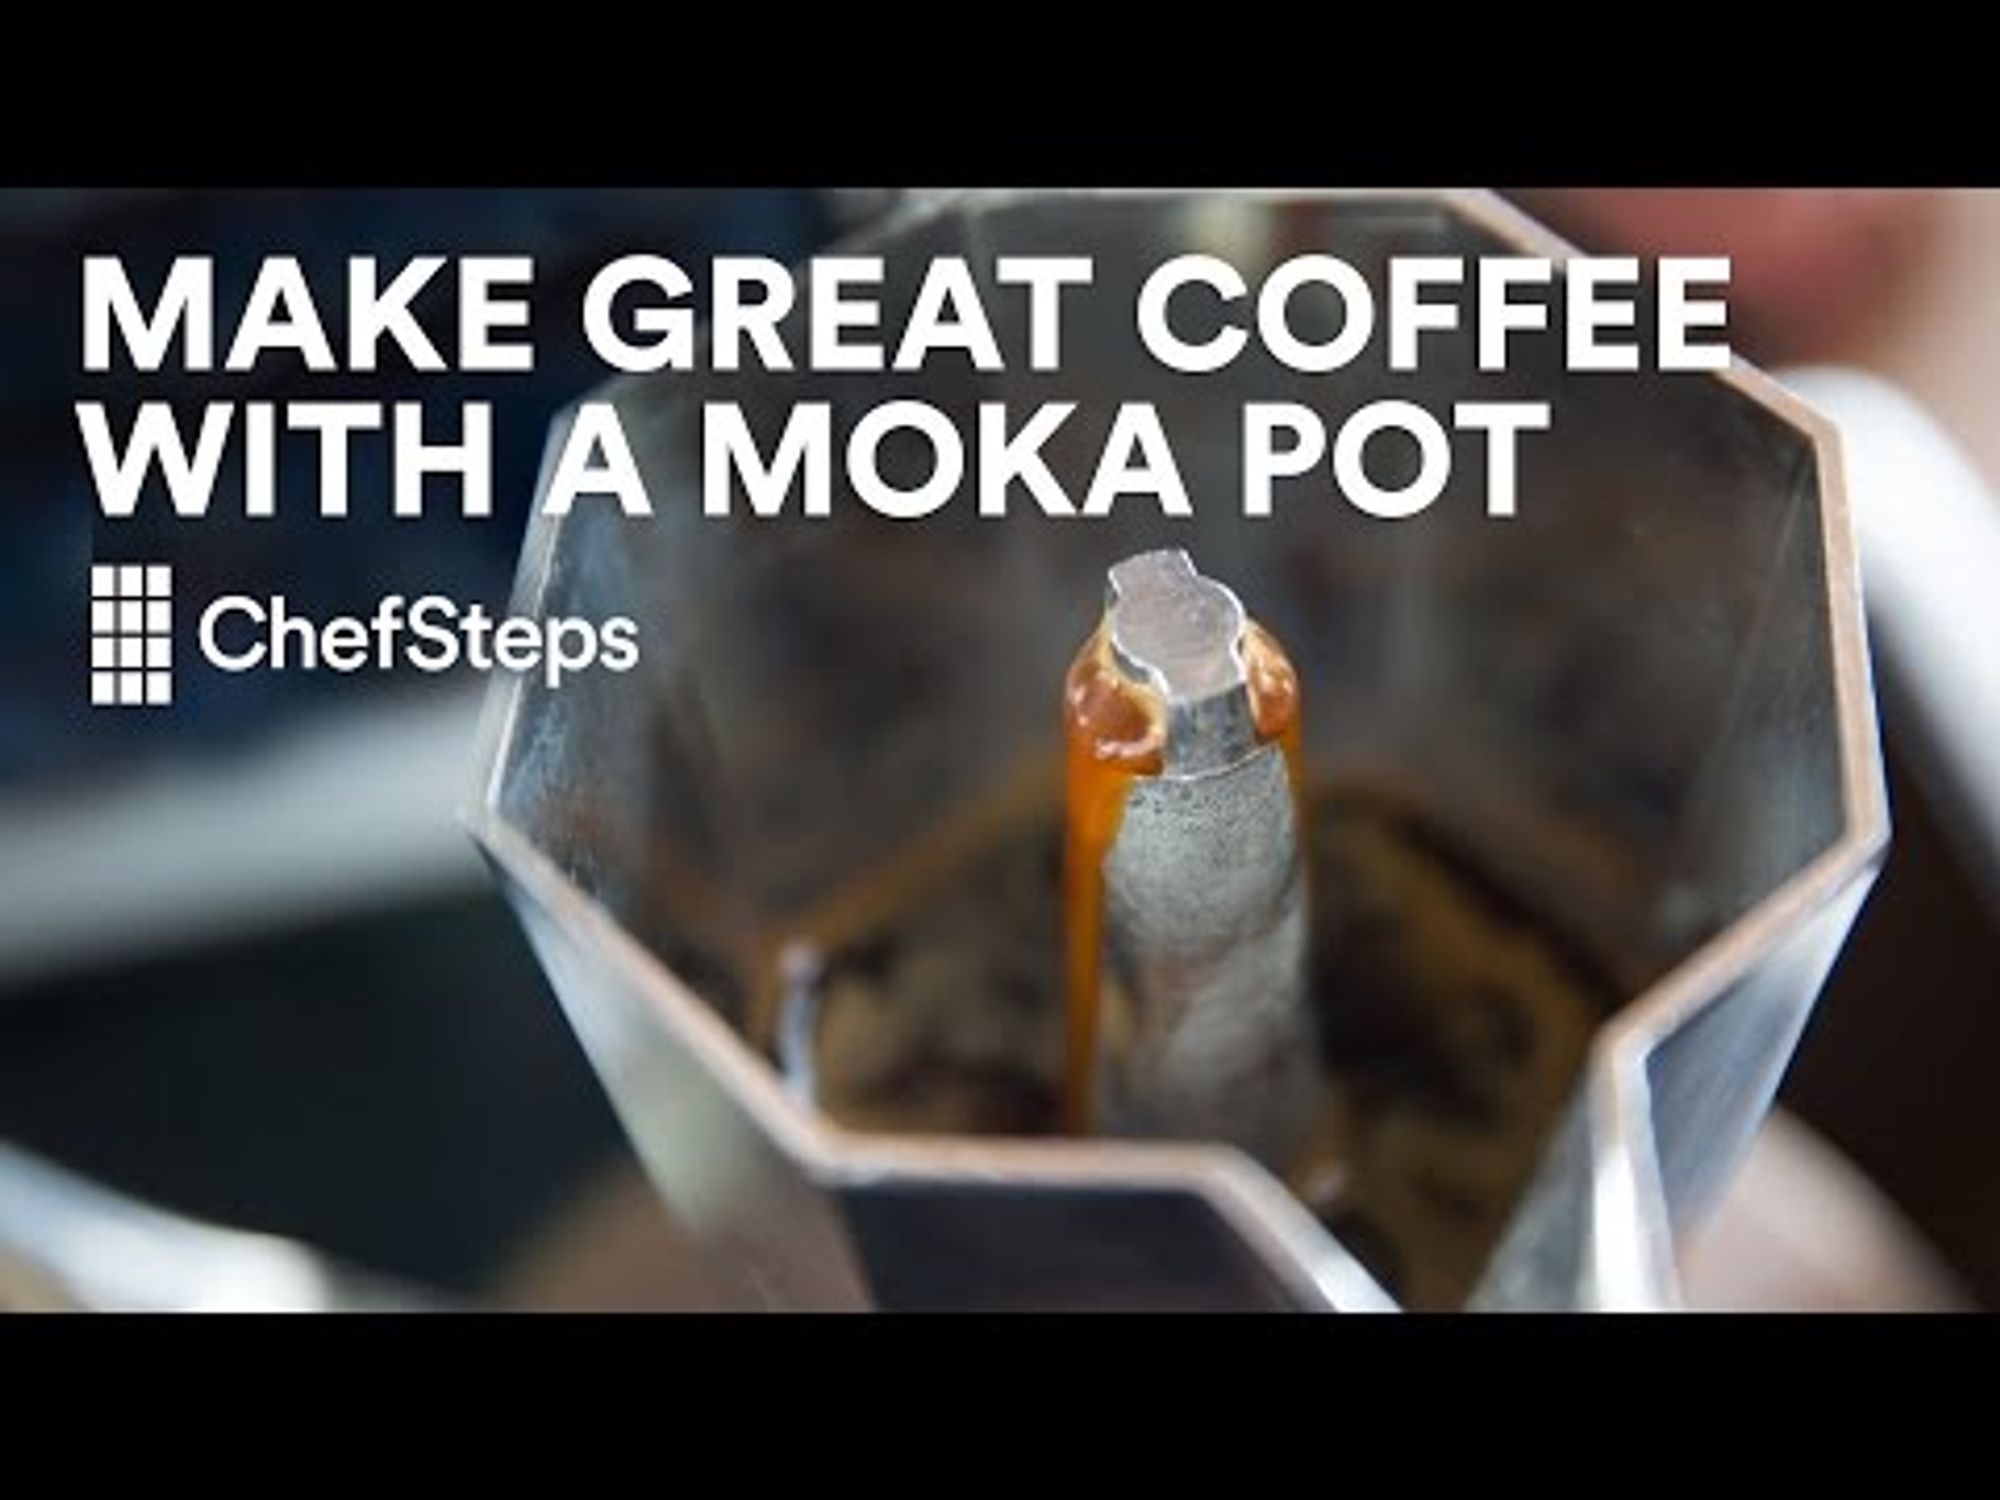 Make Great Coffee with a Moka Pot